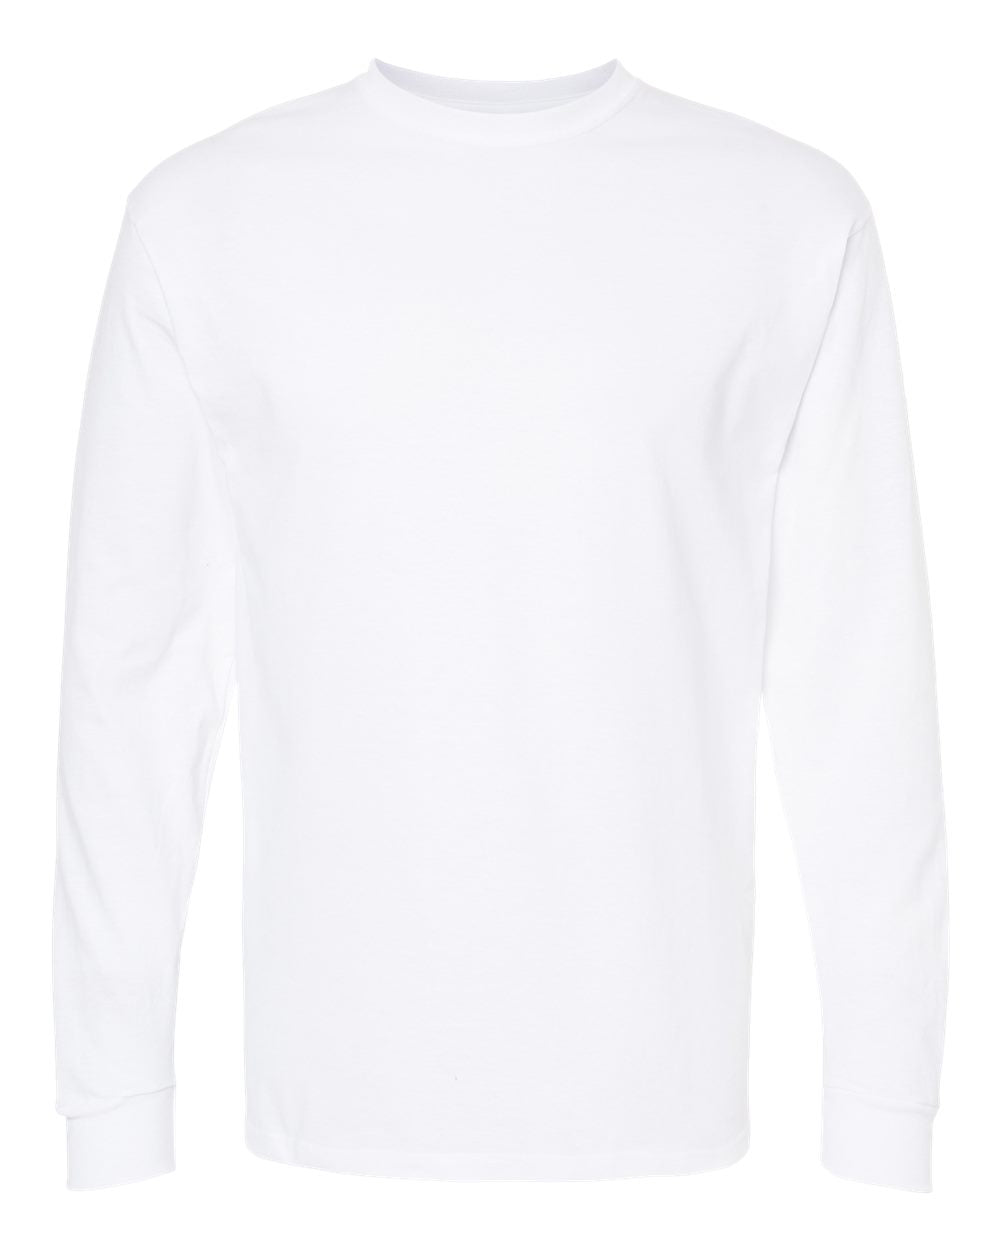 M&O Gold Soft Touch Custom Long Sleeve T Shirt